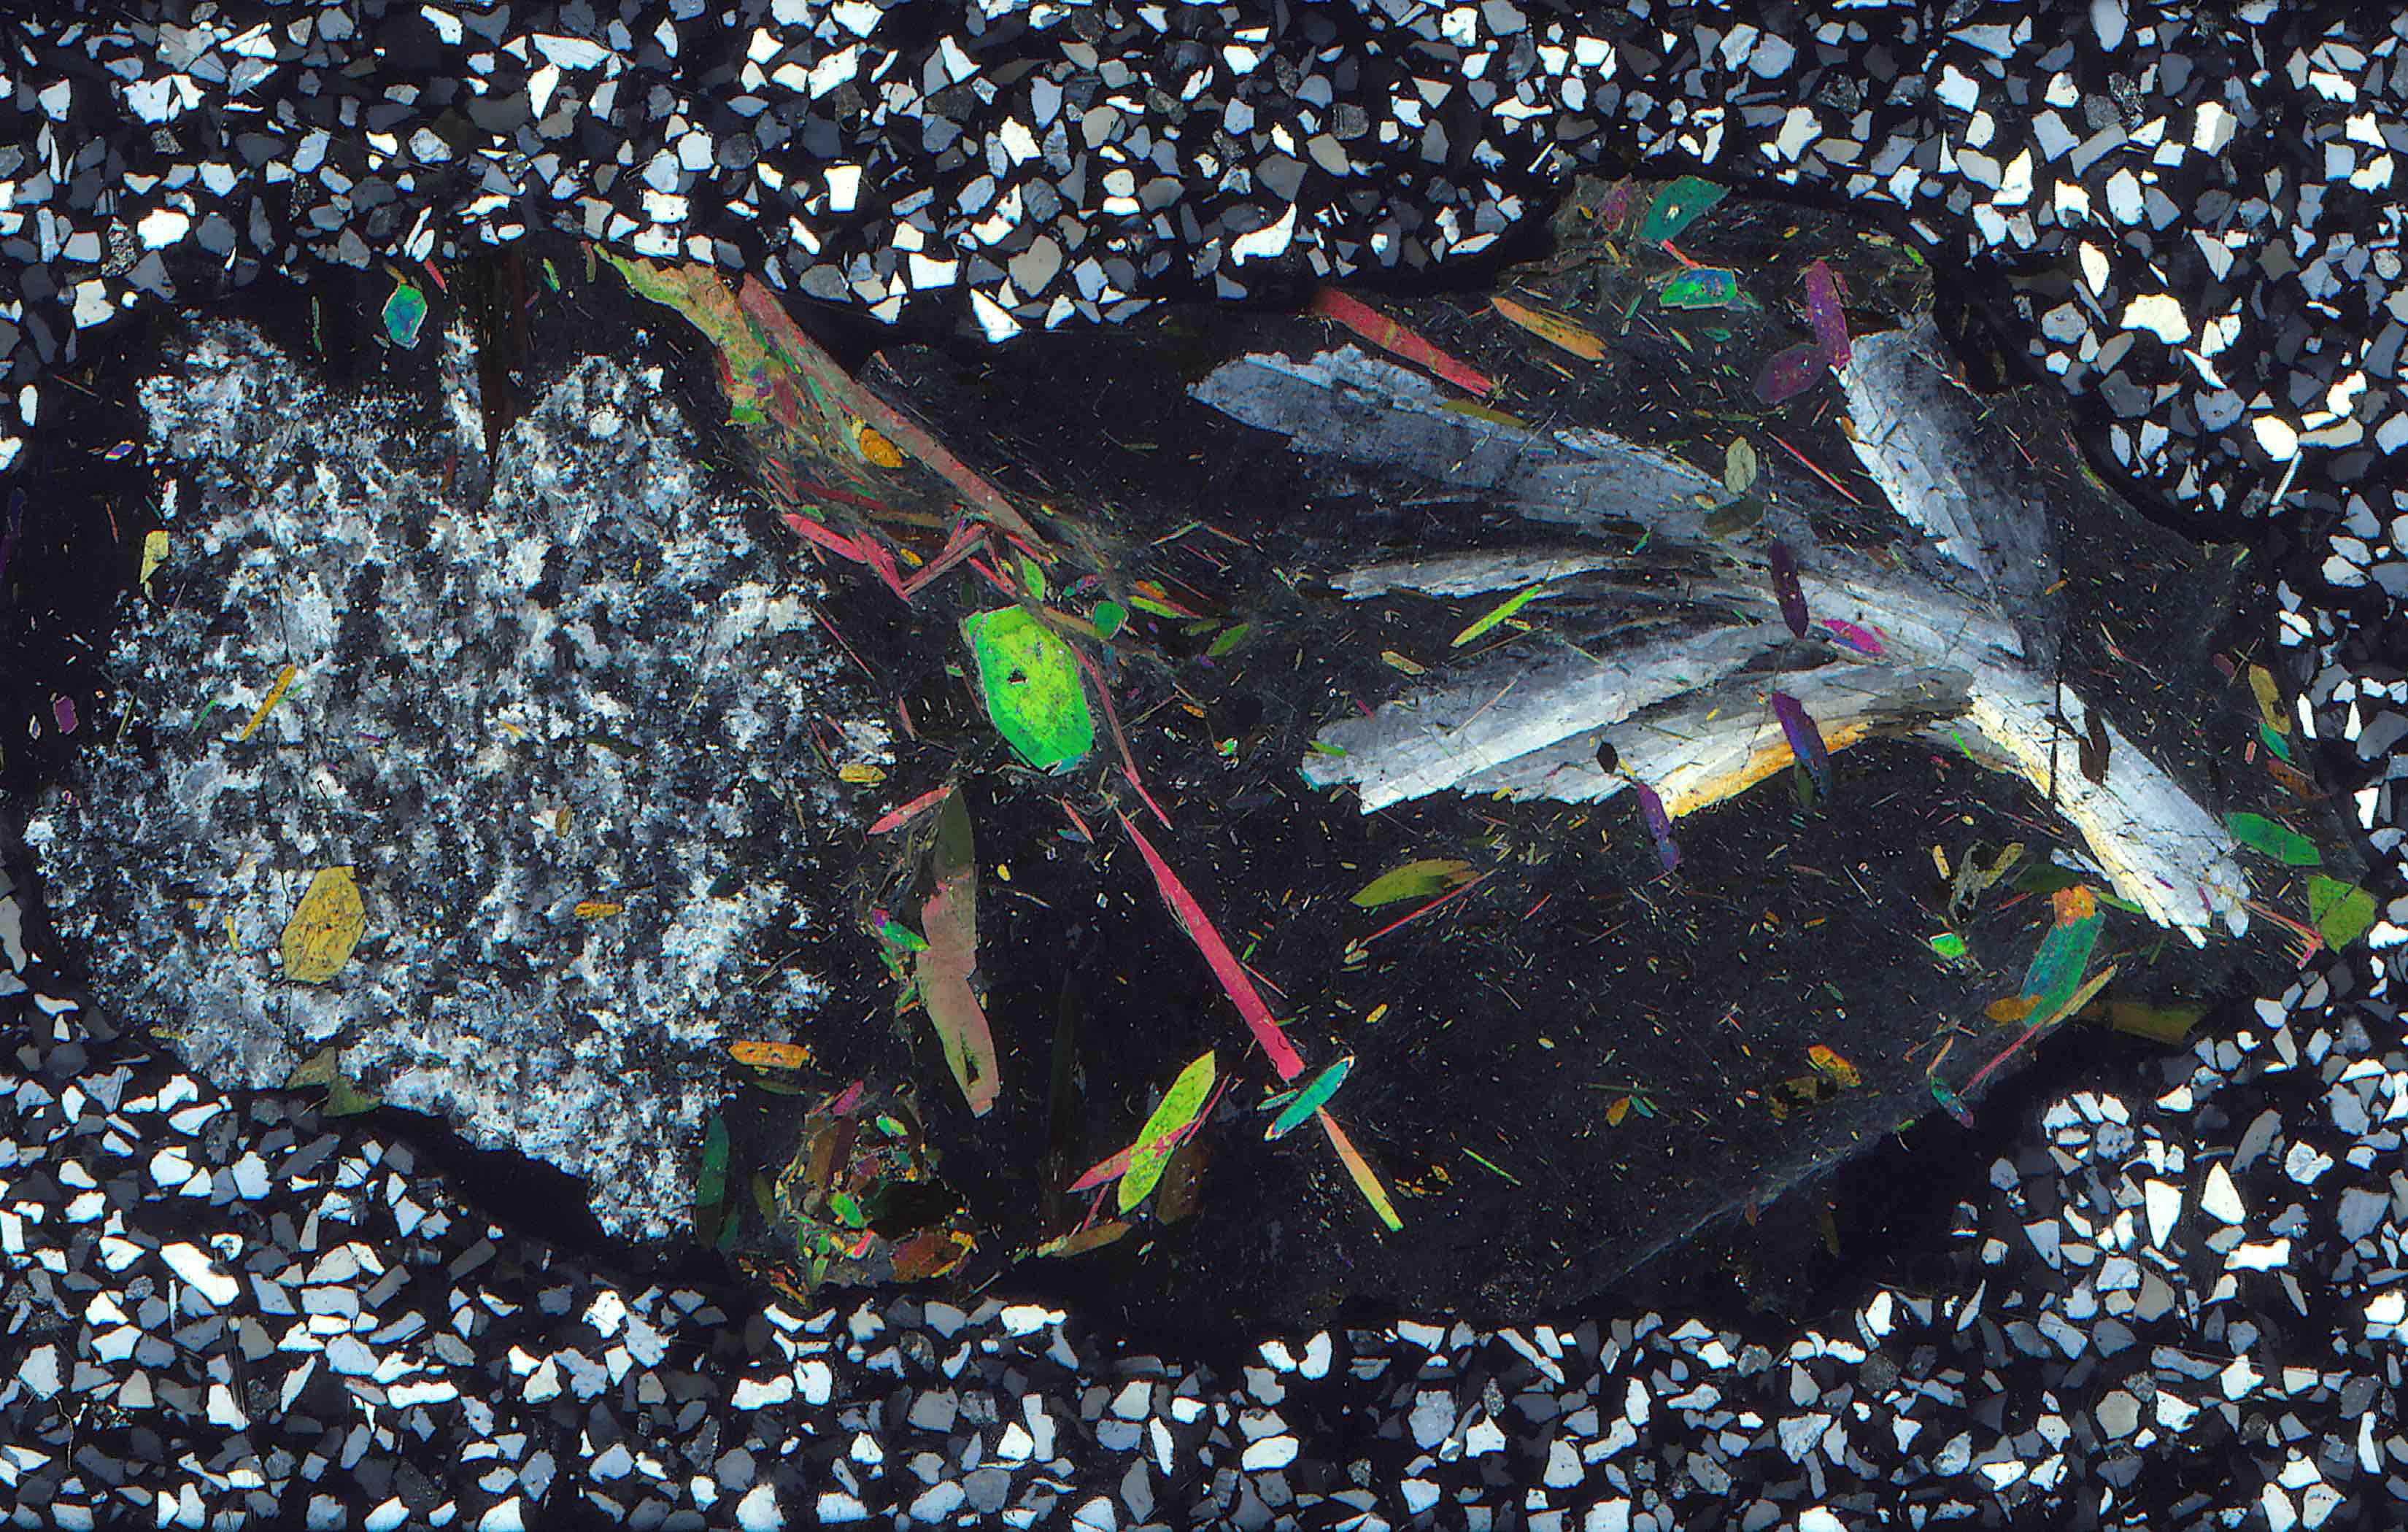 catapleiite in nepheline syenite in thin section from Lågendalen Norway